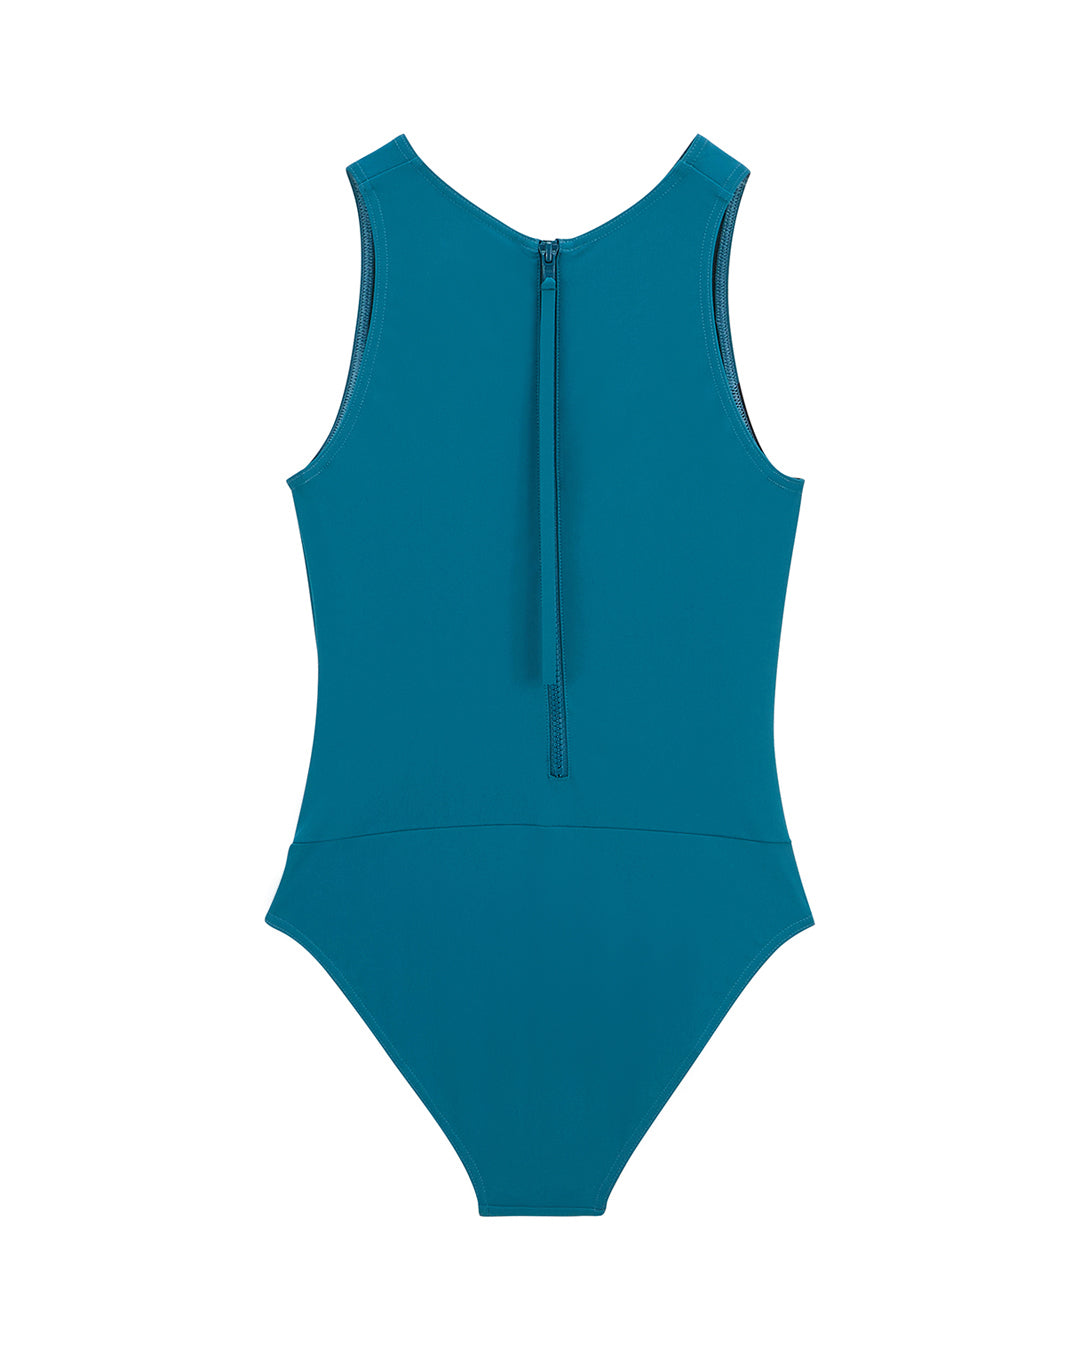 CHLORE Women's 1 Piece Full Coverage Zipper Swimsuit Pool